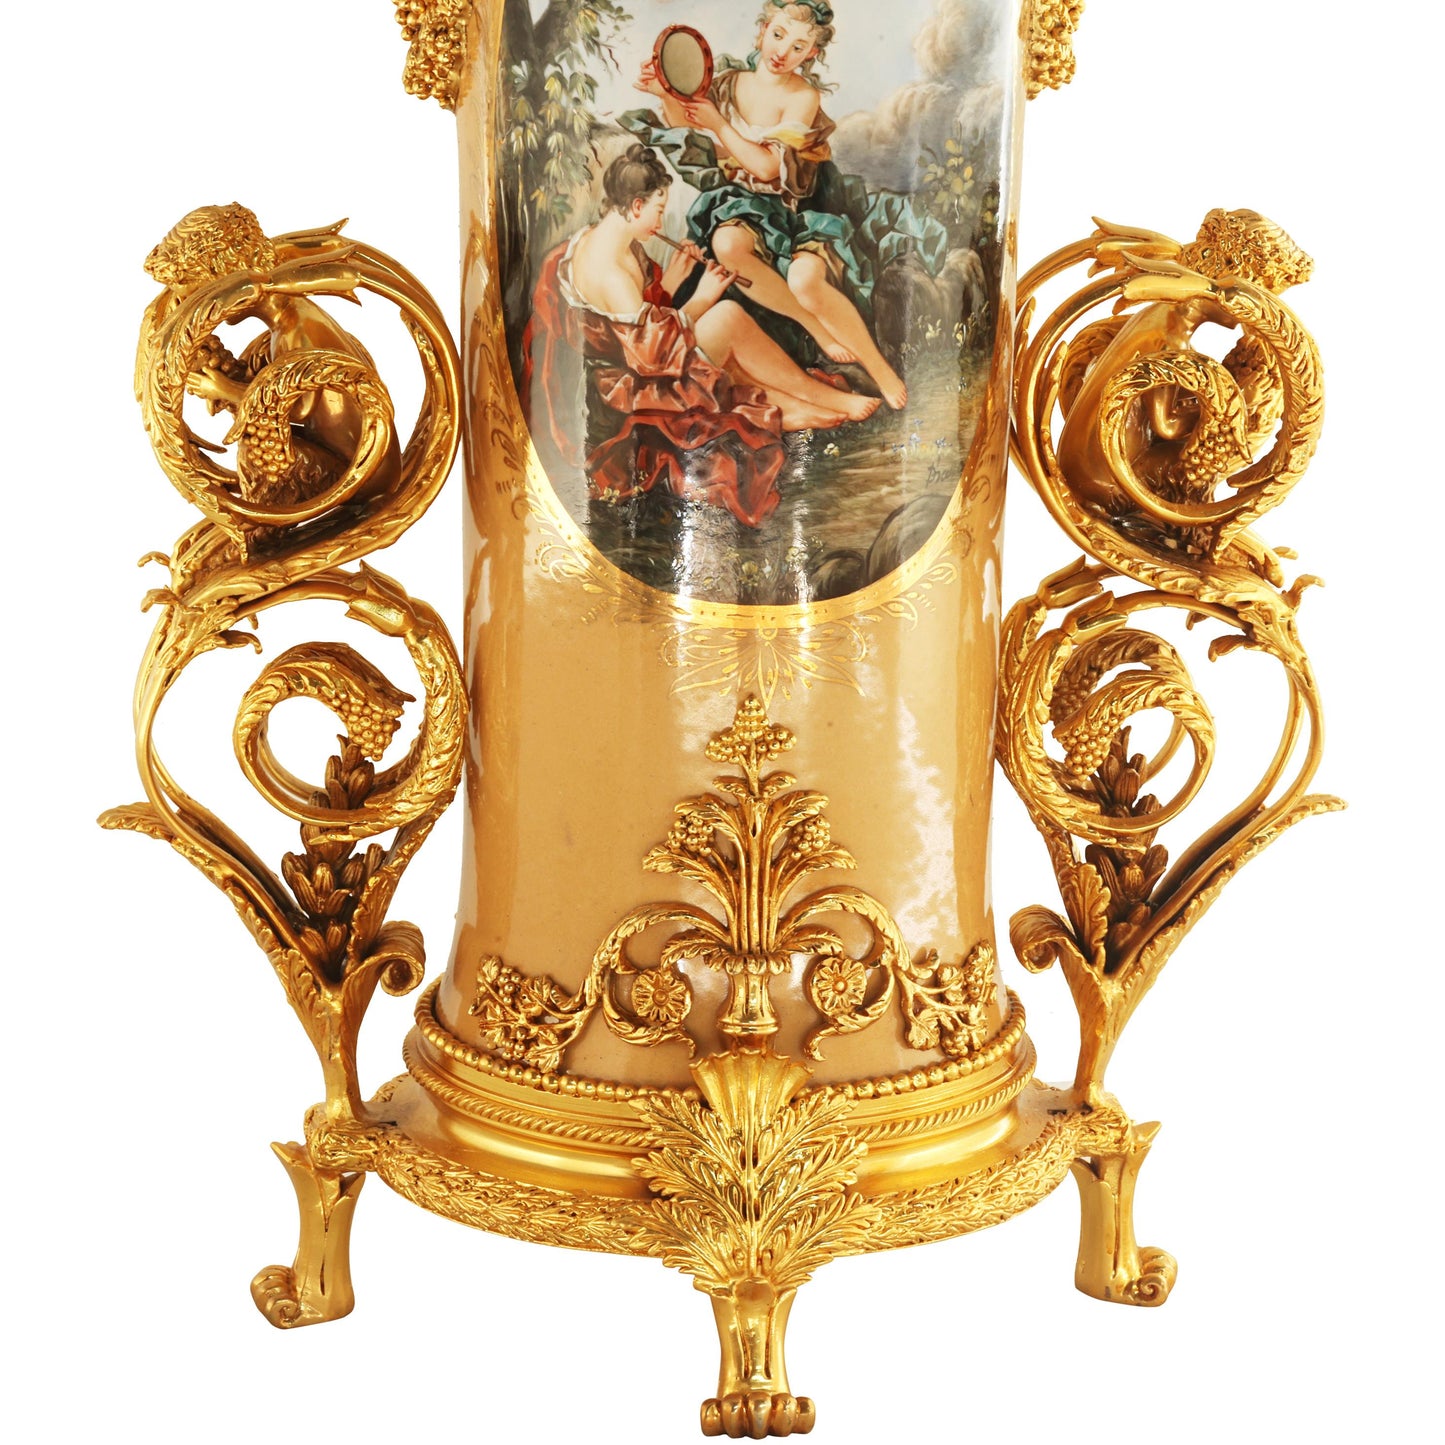 Tall Hand-painted Vase With Bronze Cherubs